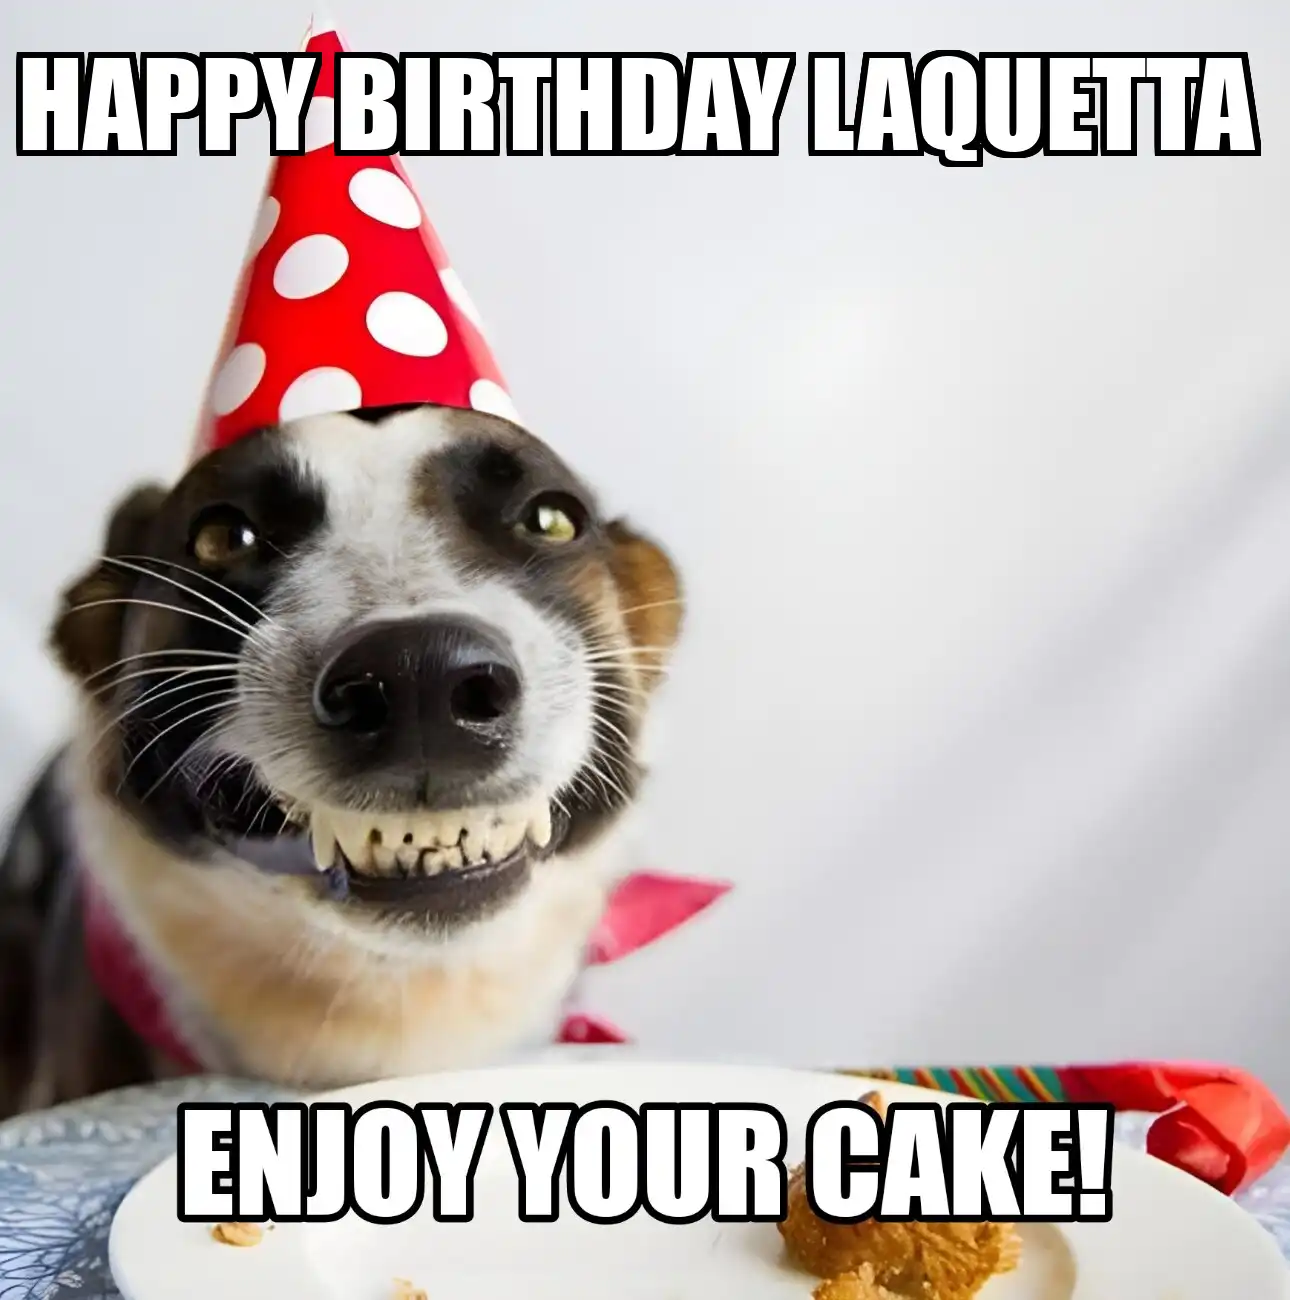 Happy Birthday Laquetta Enjoy Your Cake Dog Meme